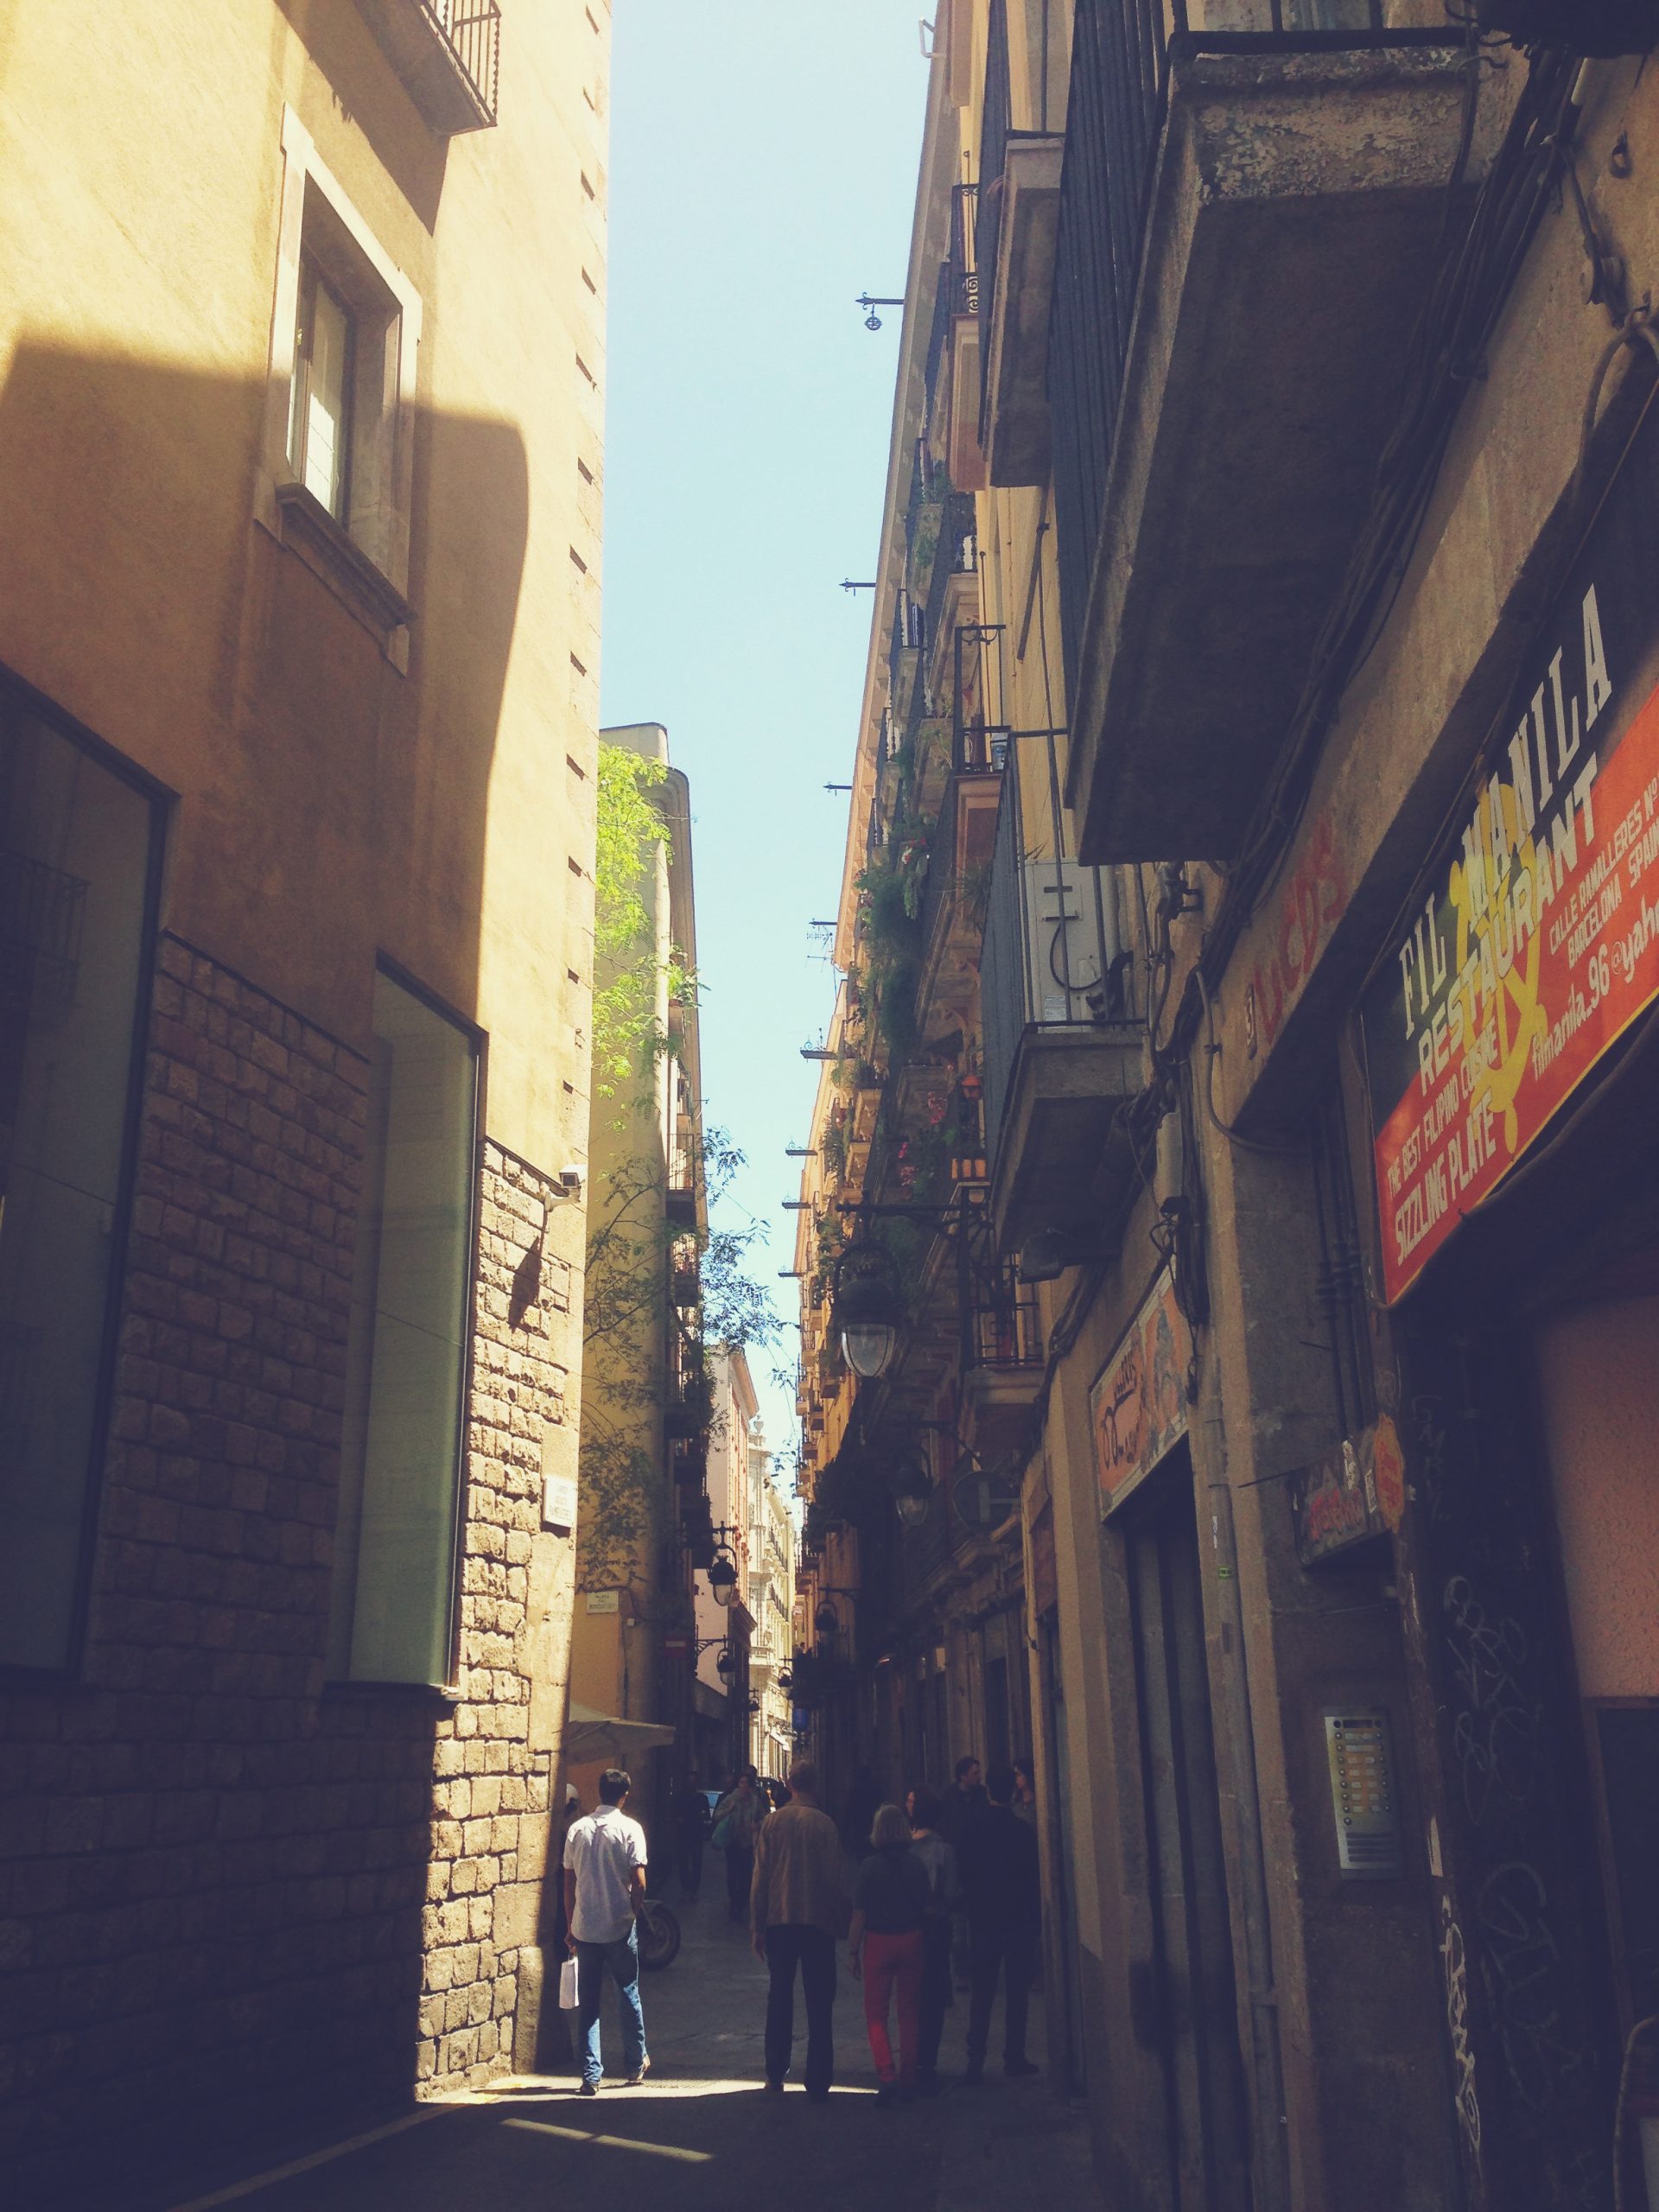 Tiny alleys in Barcelona